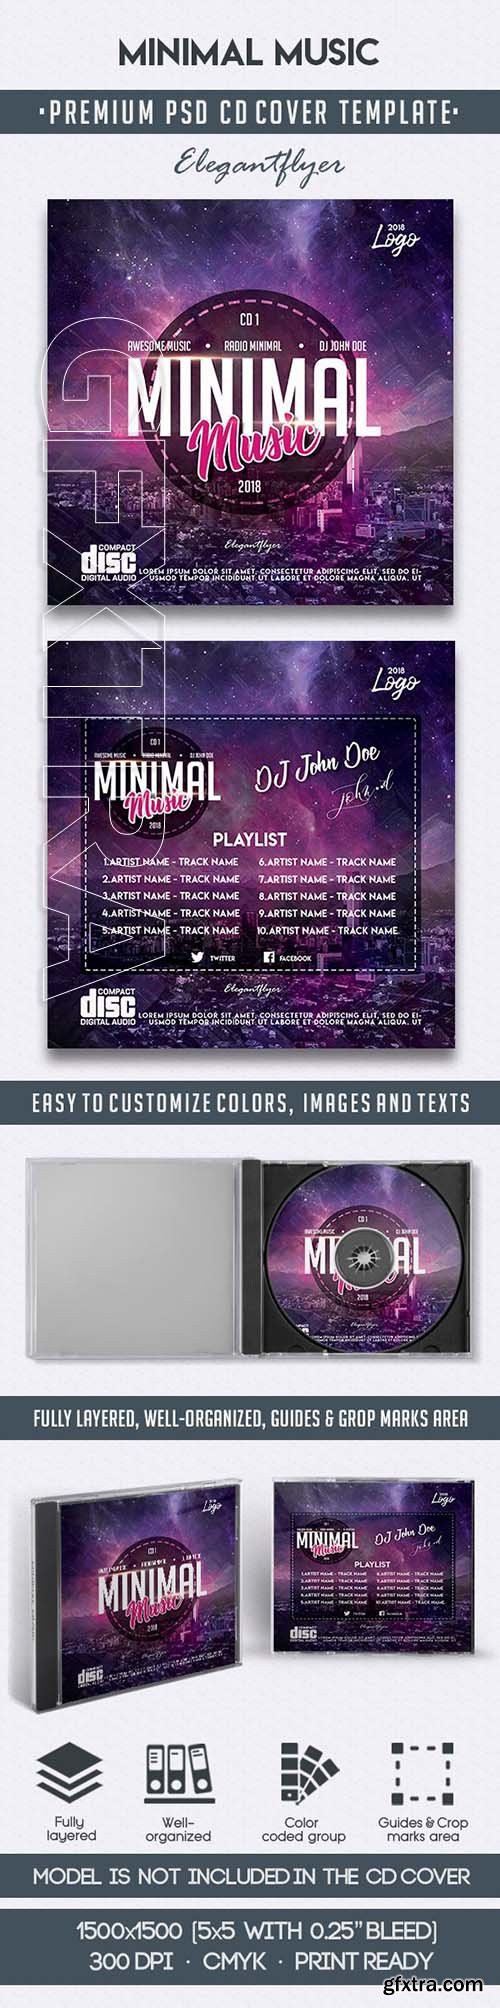 Minimal Music CD Cover